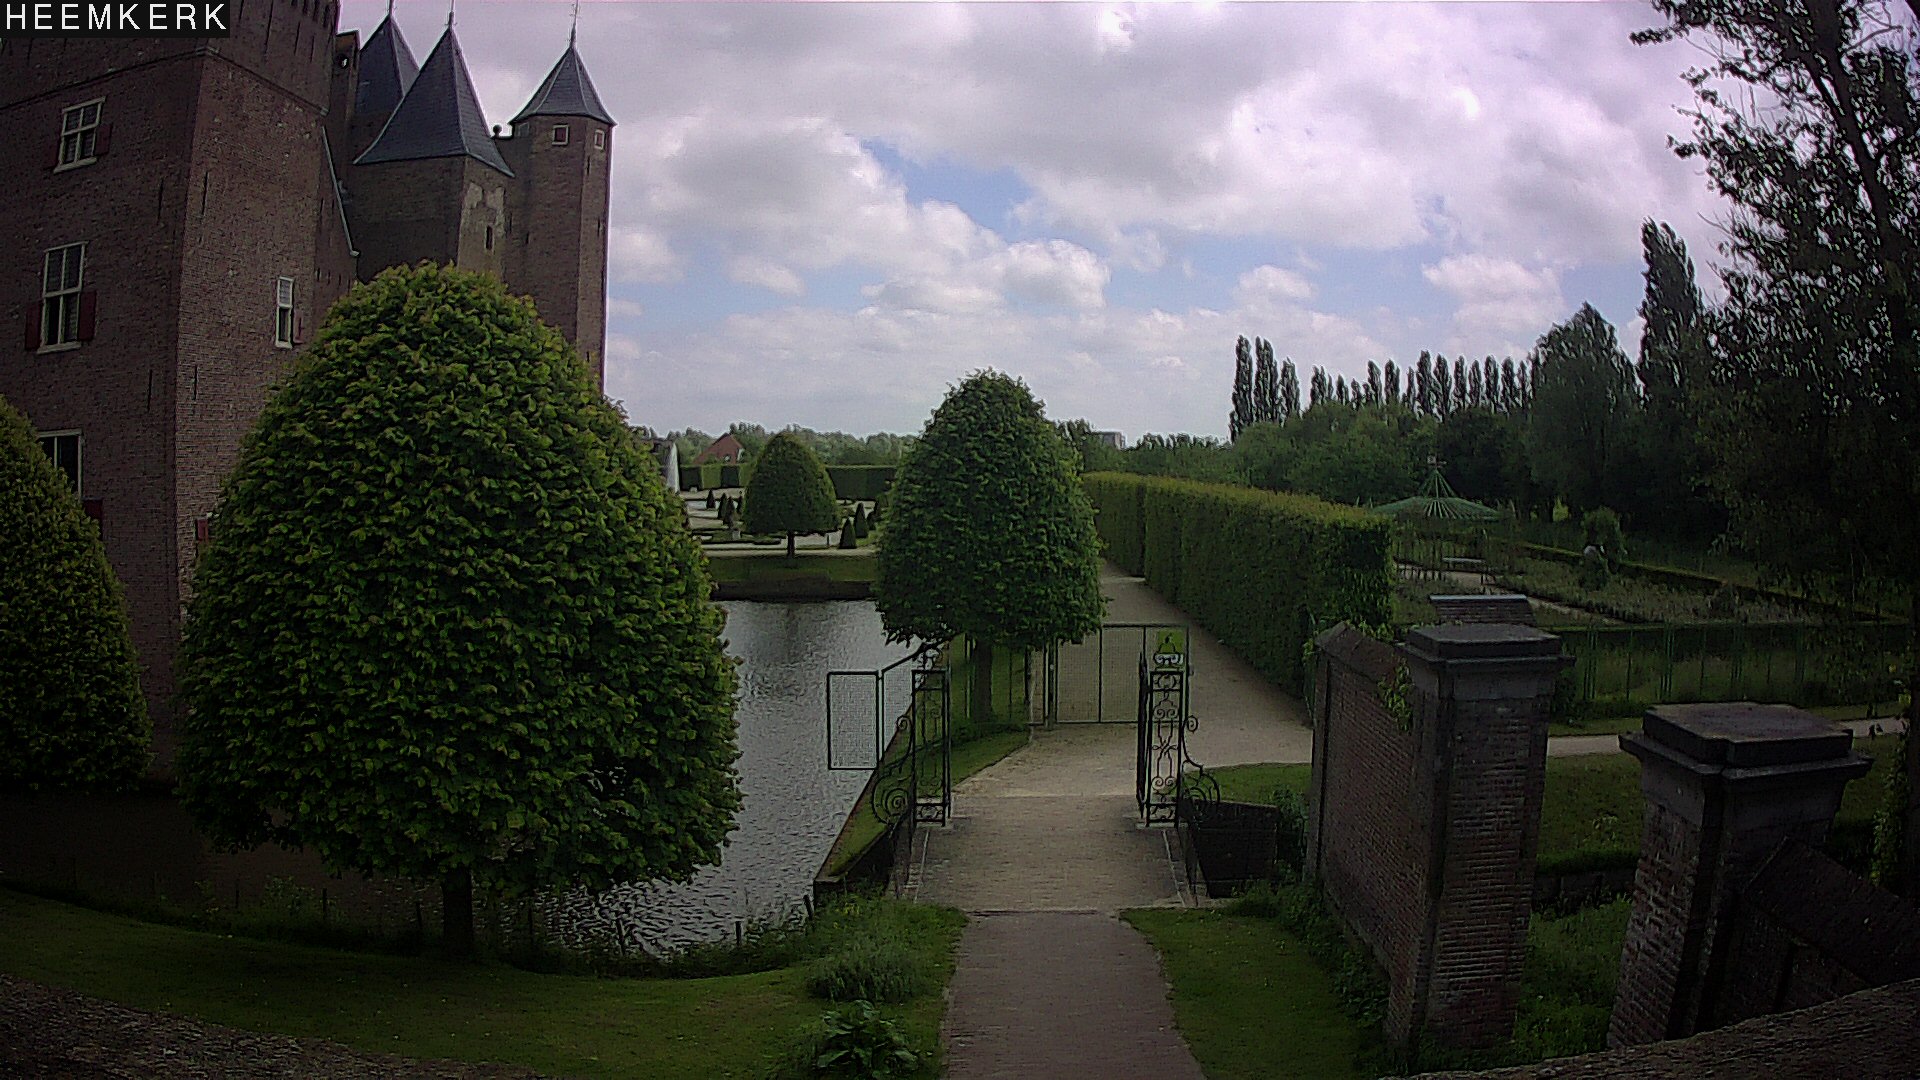 Heemskerk Tor. 14:46